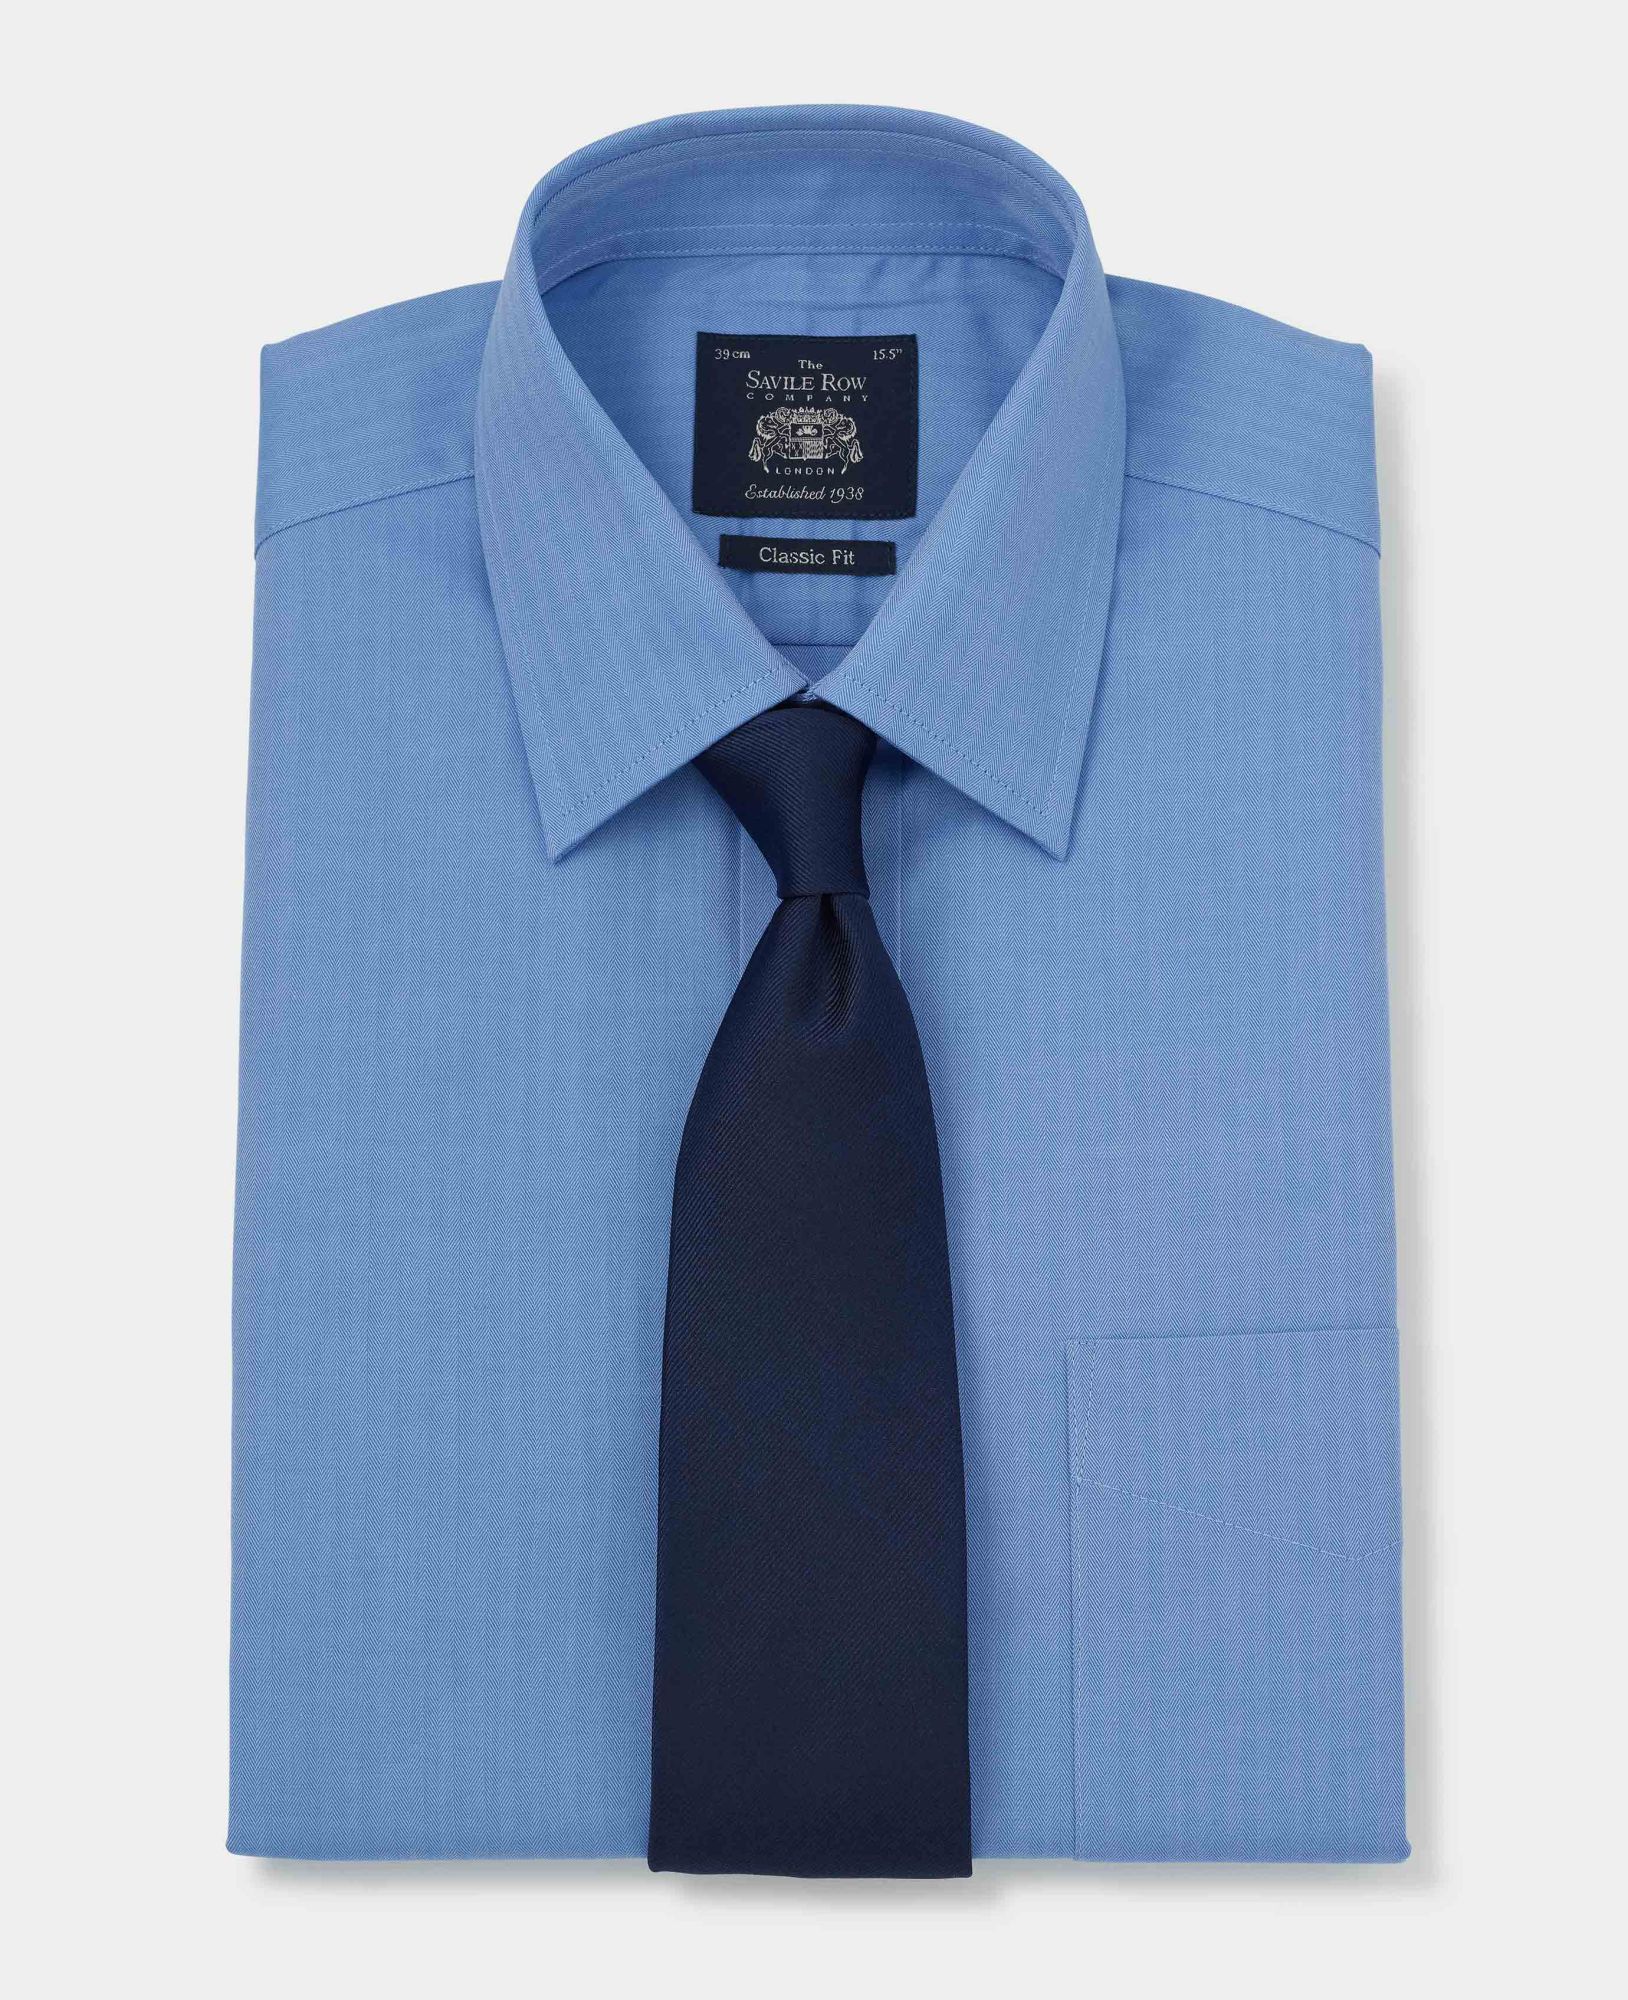 Mid Blue Herringbone Classic Fit Shirt - Double Cuff 16